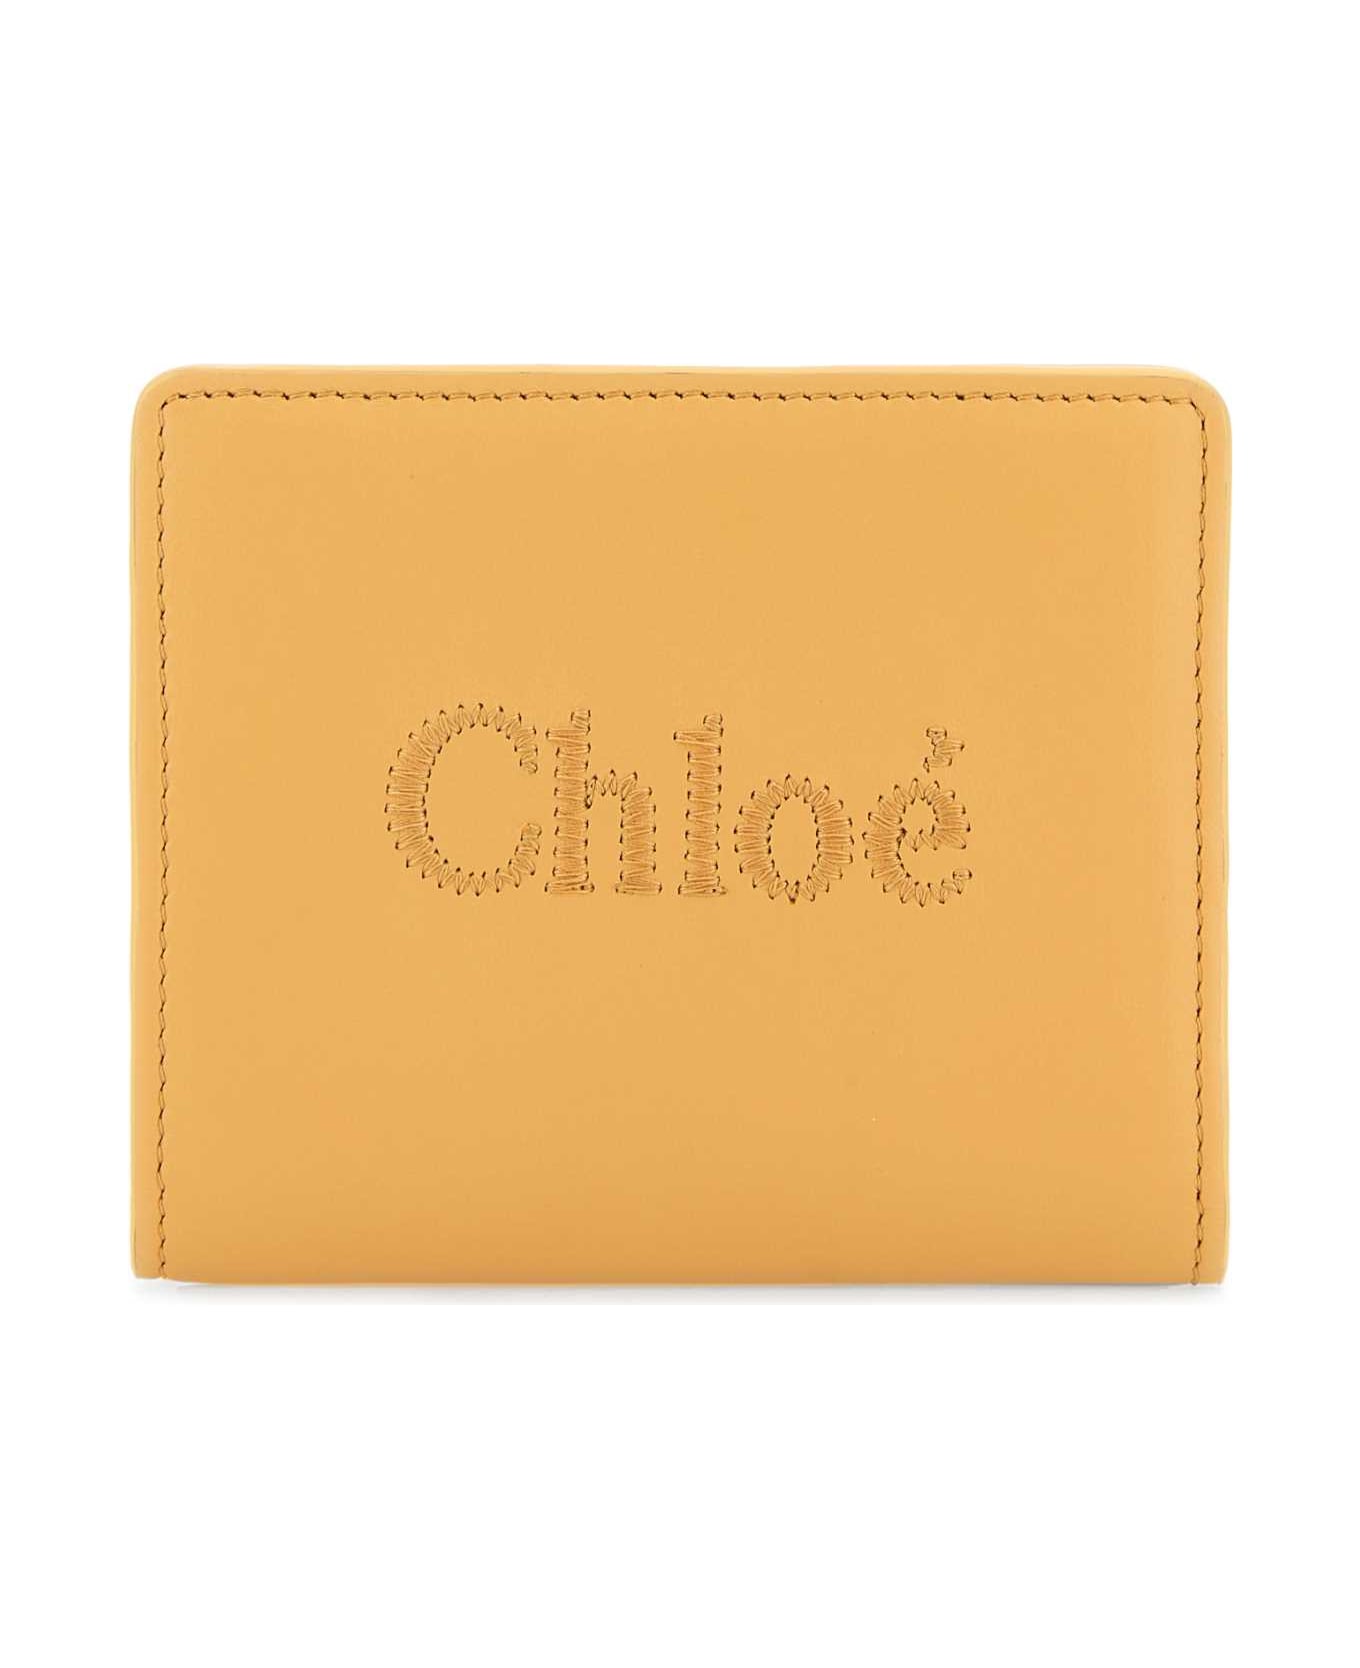 Chloé Peach Leather Wallet - HONEYGOLD